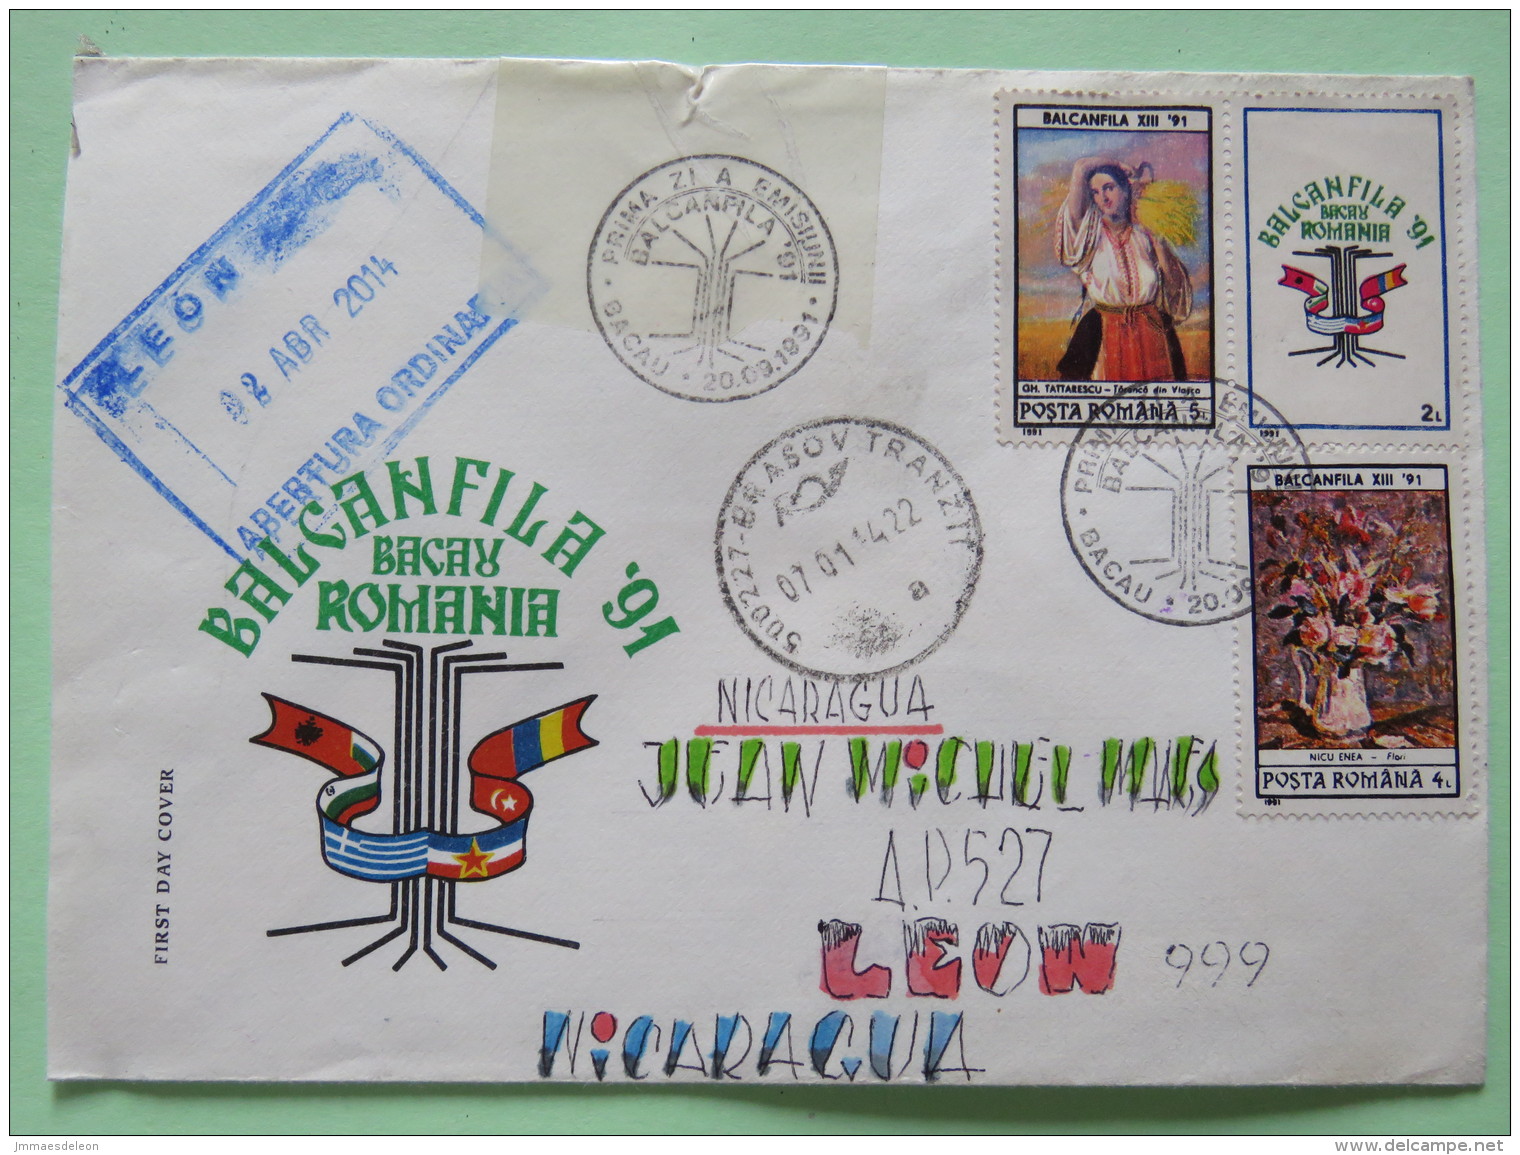 Romania 2014 FDC Cover Bacau (1991) Brasov To Nicaragua - BALCANFILA 91 + Label - Plant Flower On Back - Briefe U. Dokumente